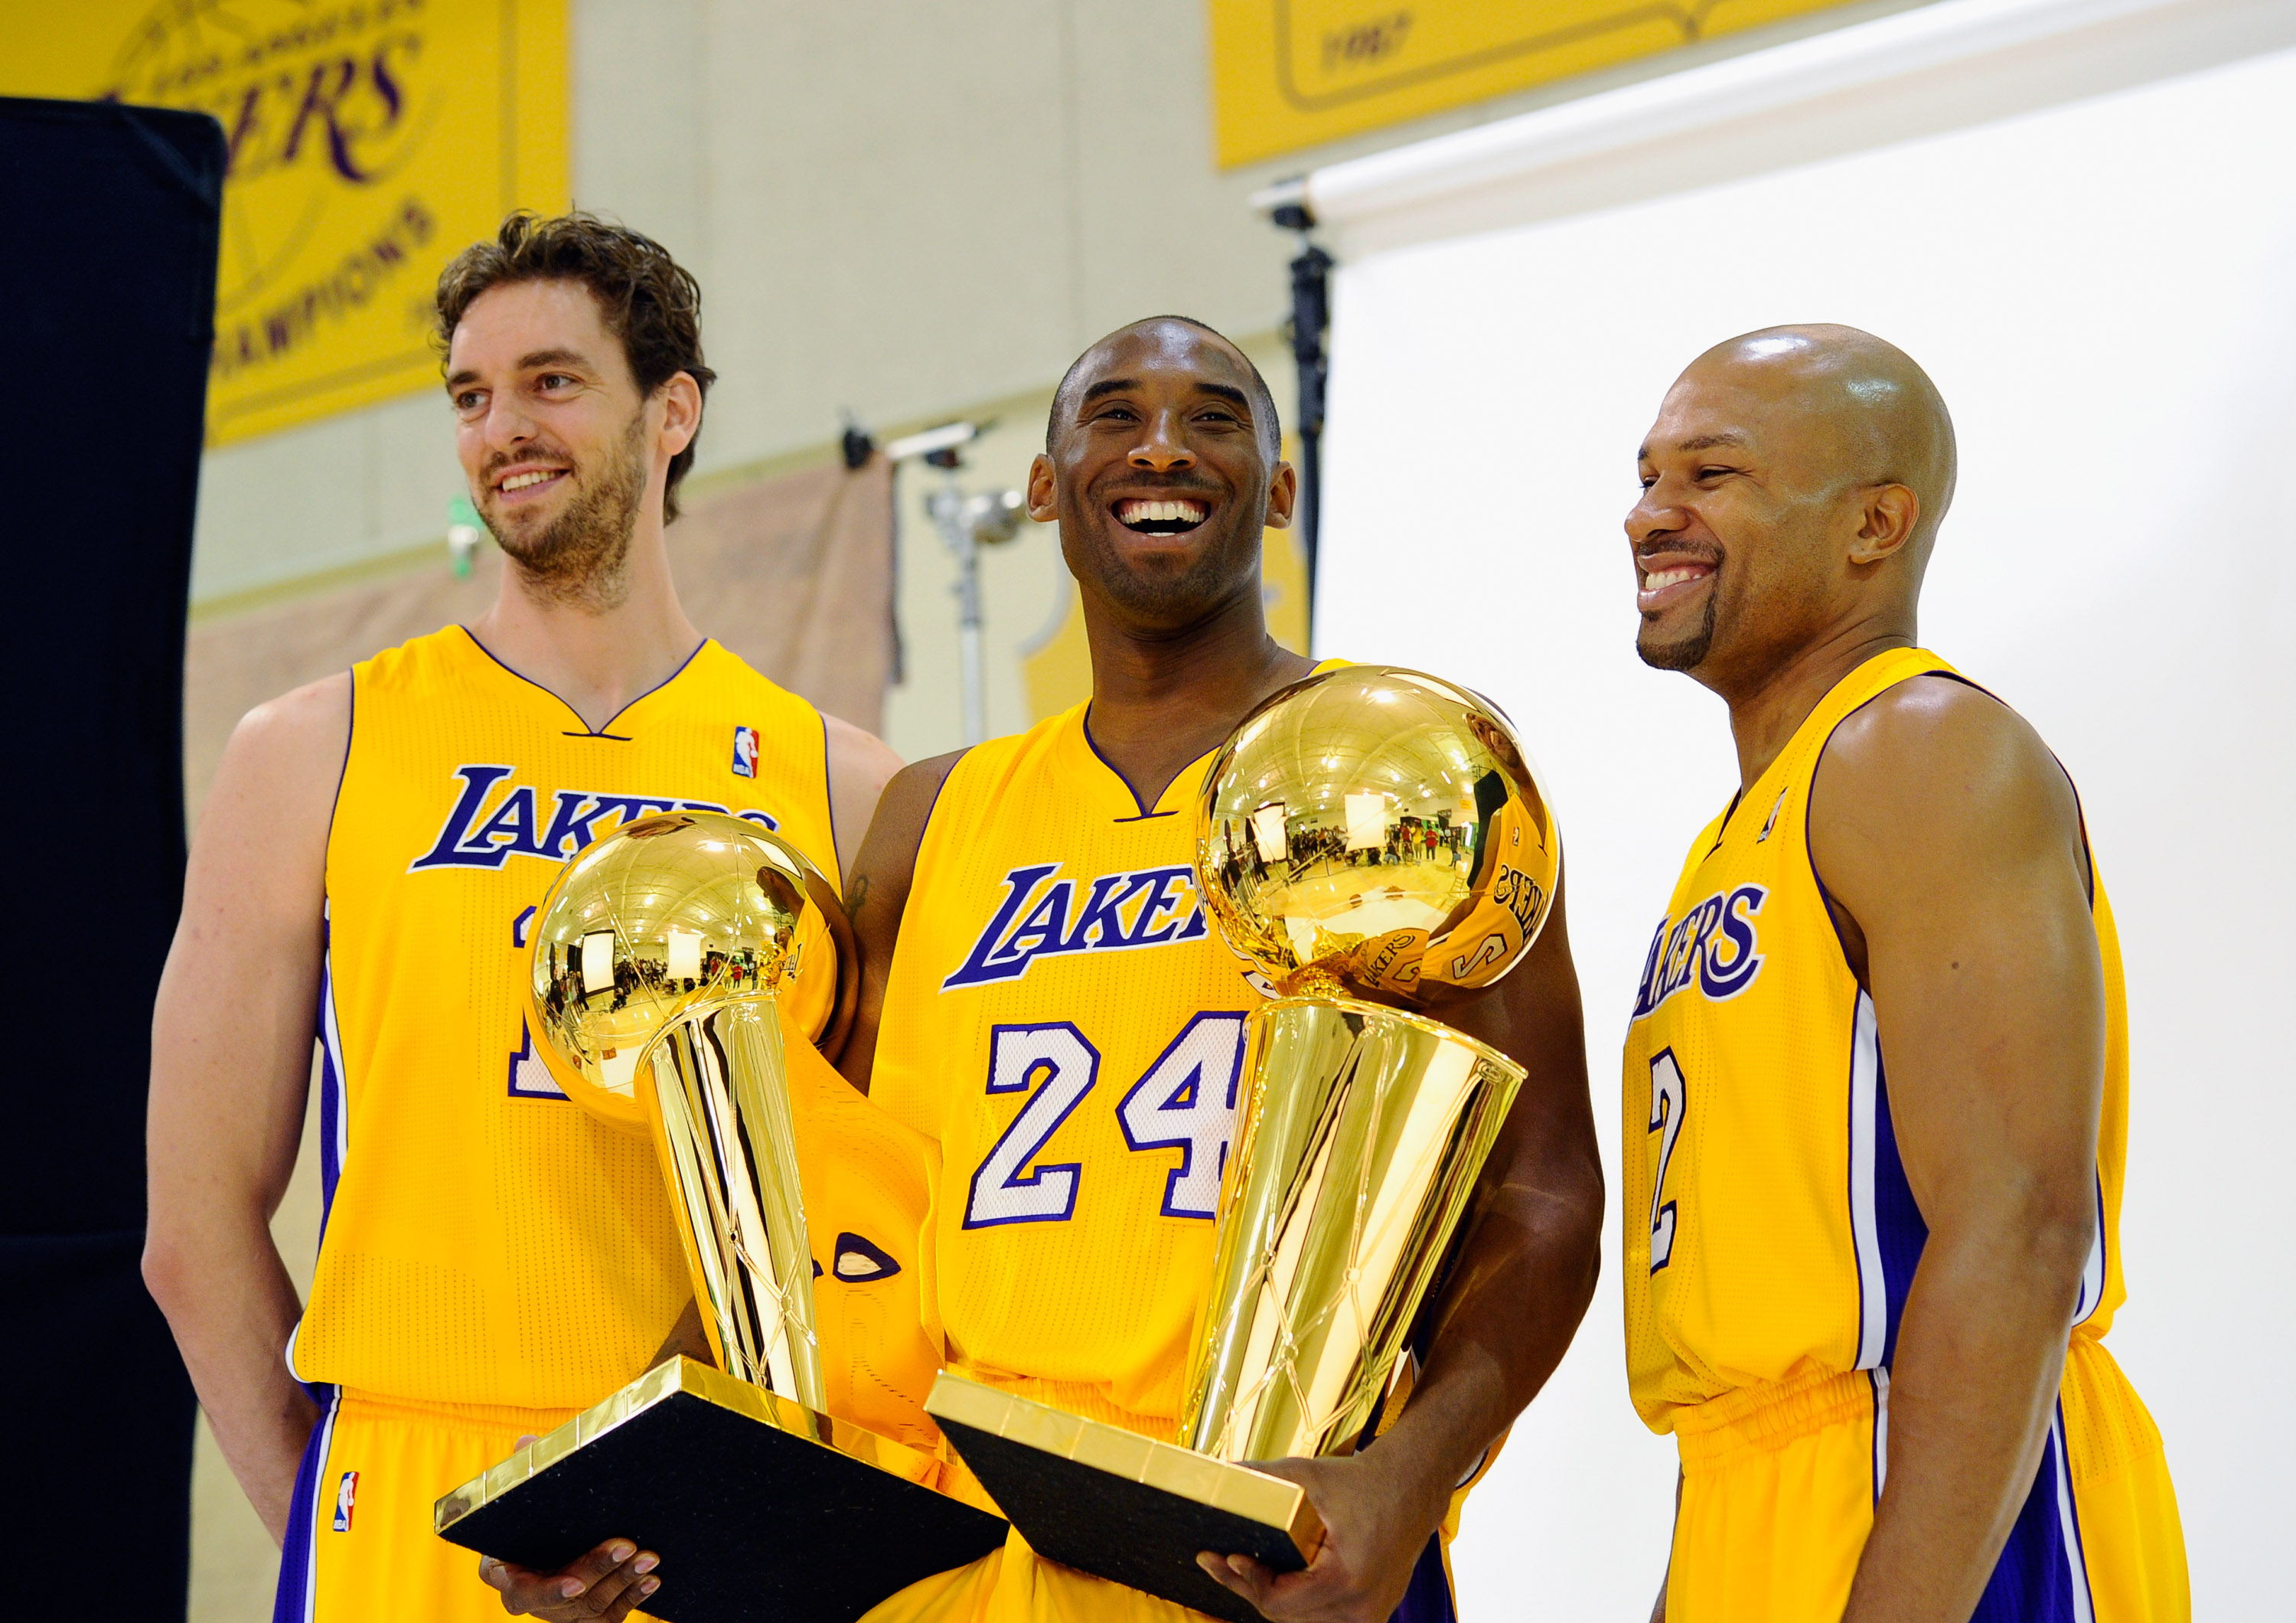 2010 NBA Finals - Wikipedia